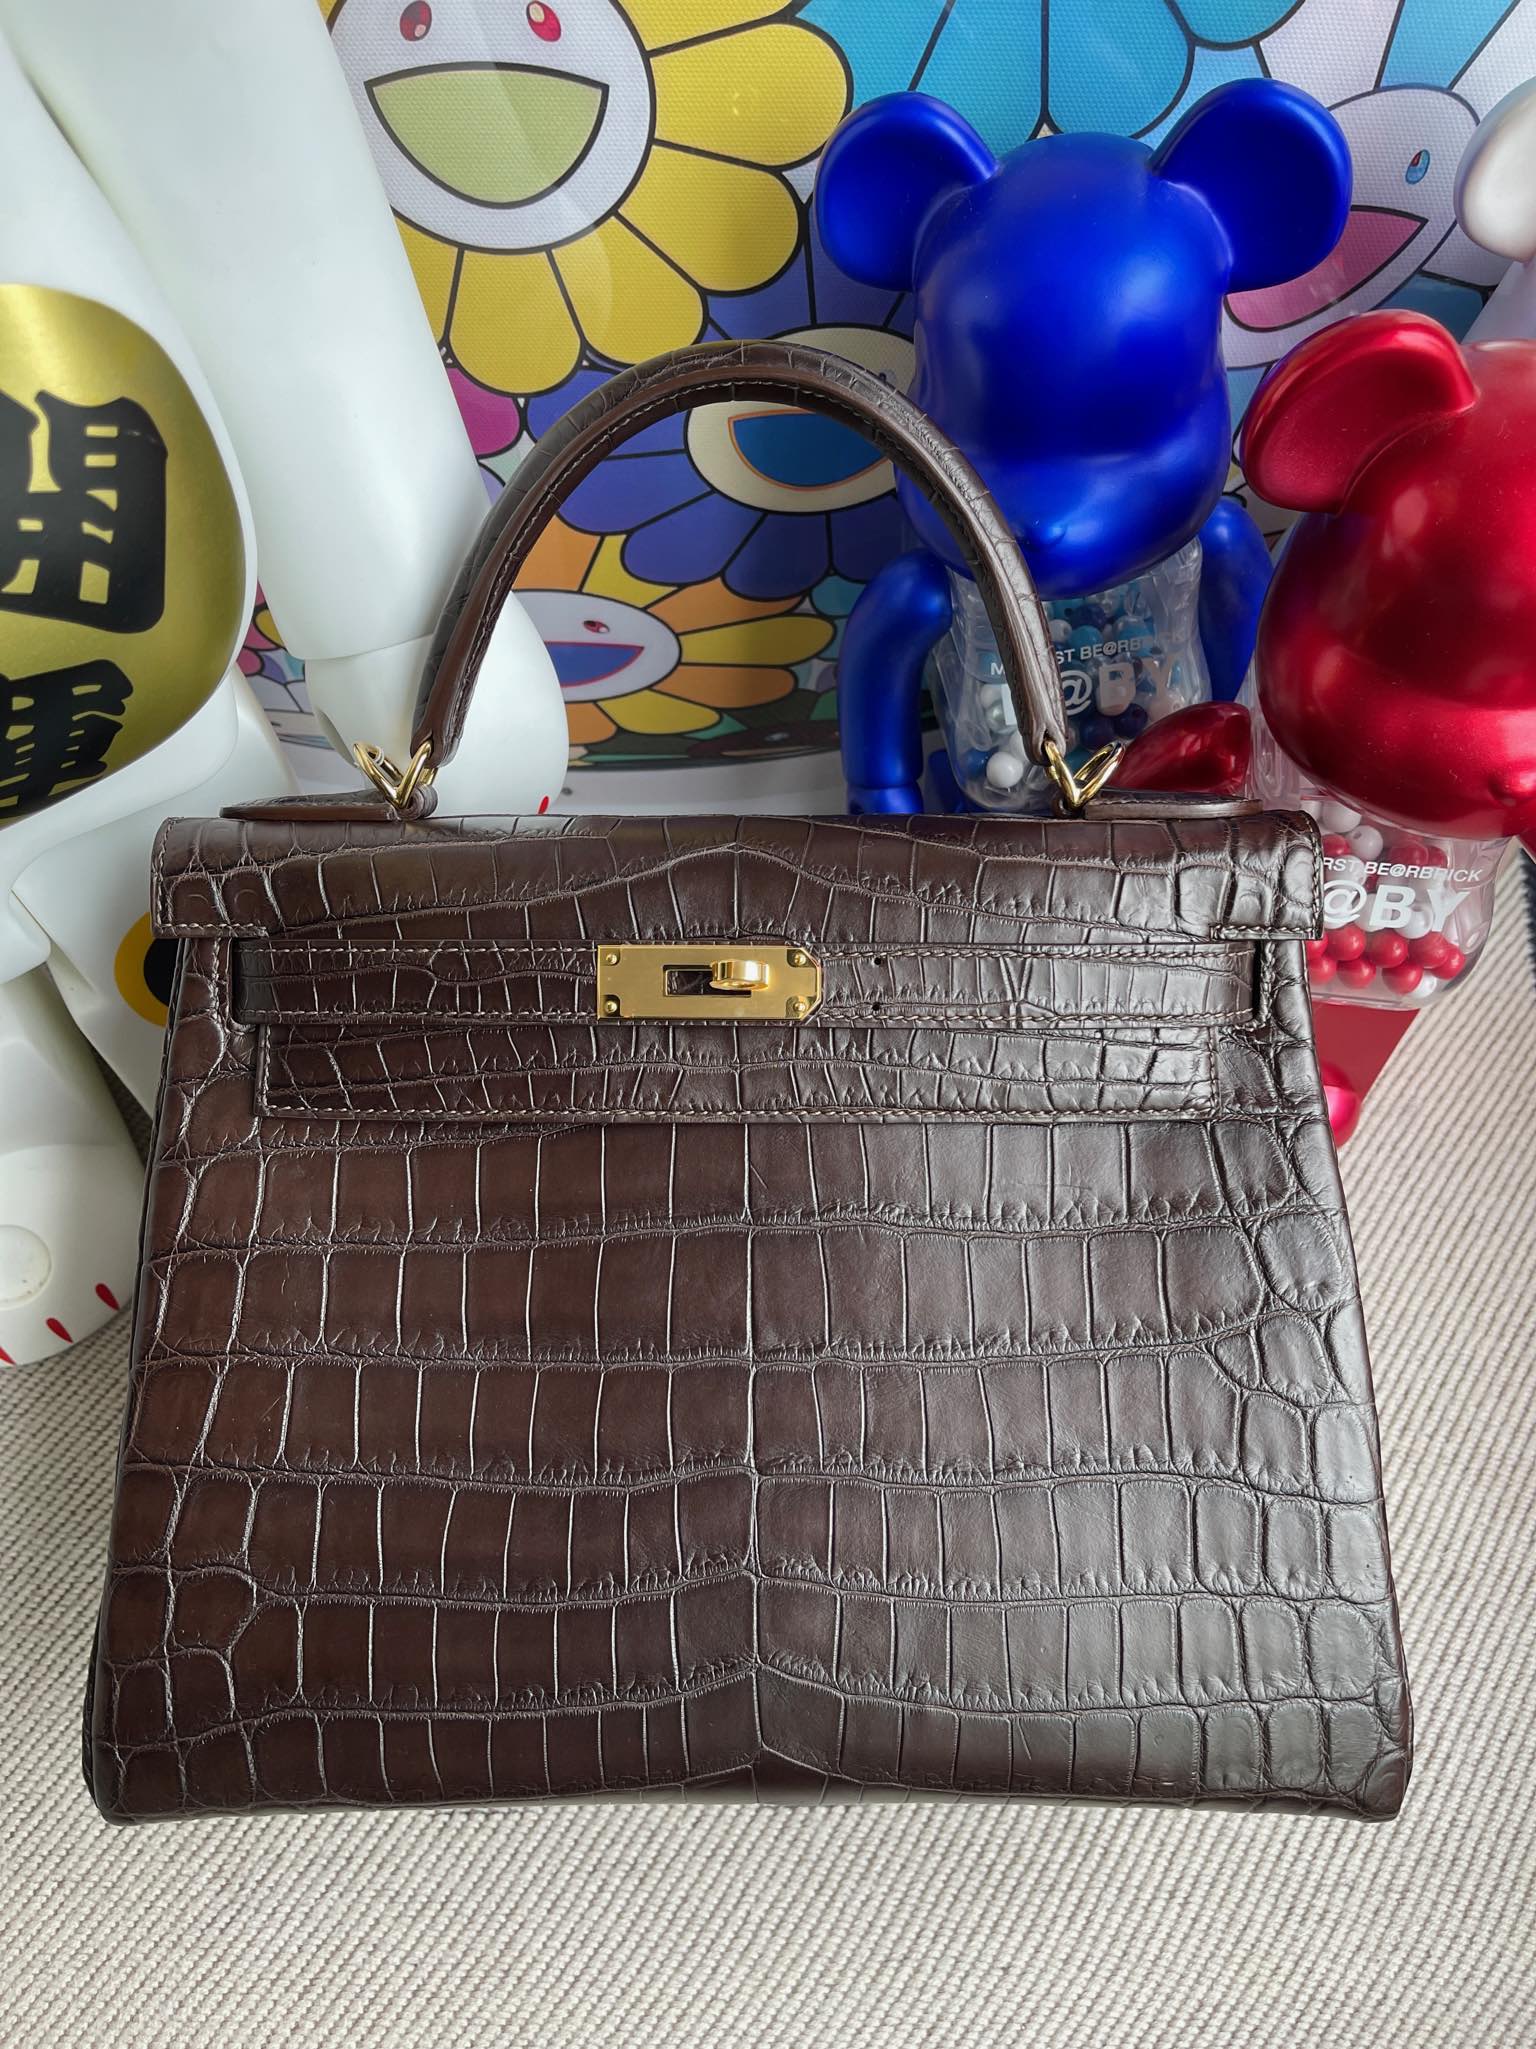 Hermes Birkin Bag Crocodile Leather Gold Hardware In Brown